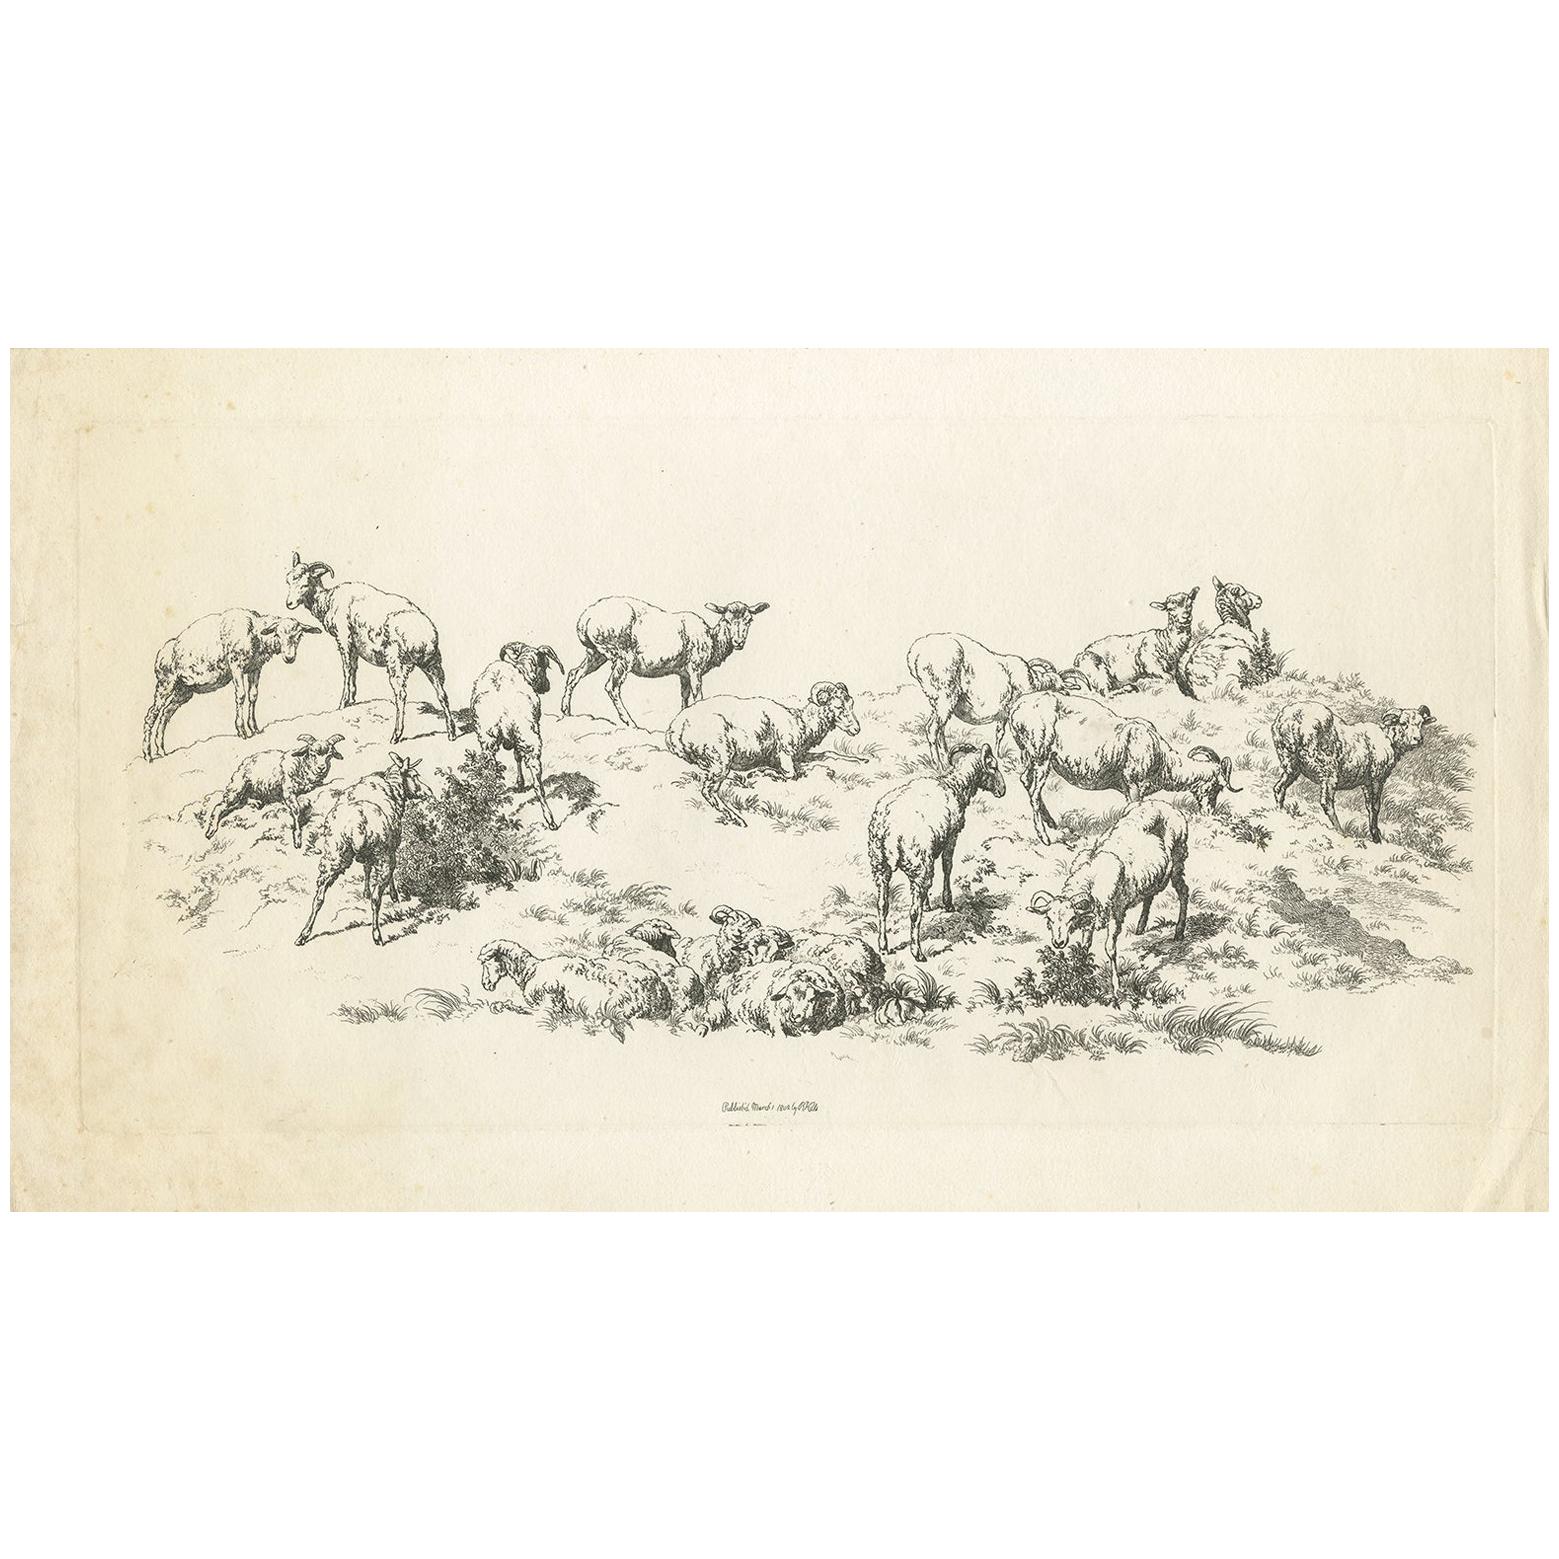 Antique Print of Sheep by Robert Hills, 1802